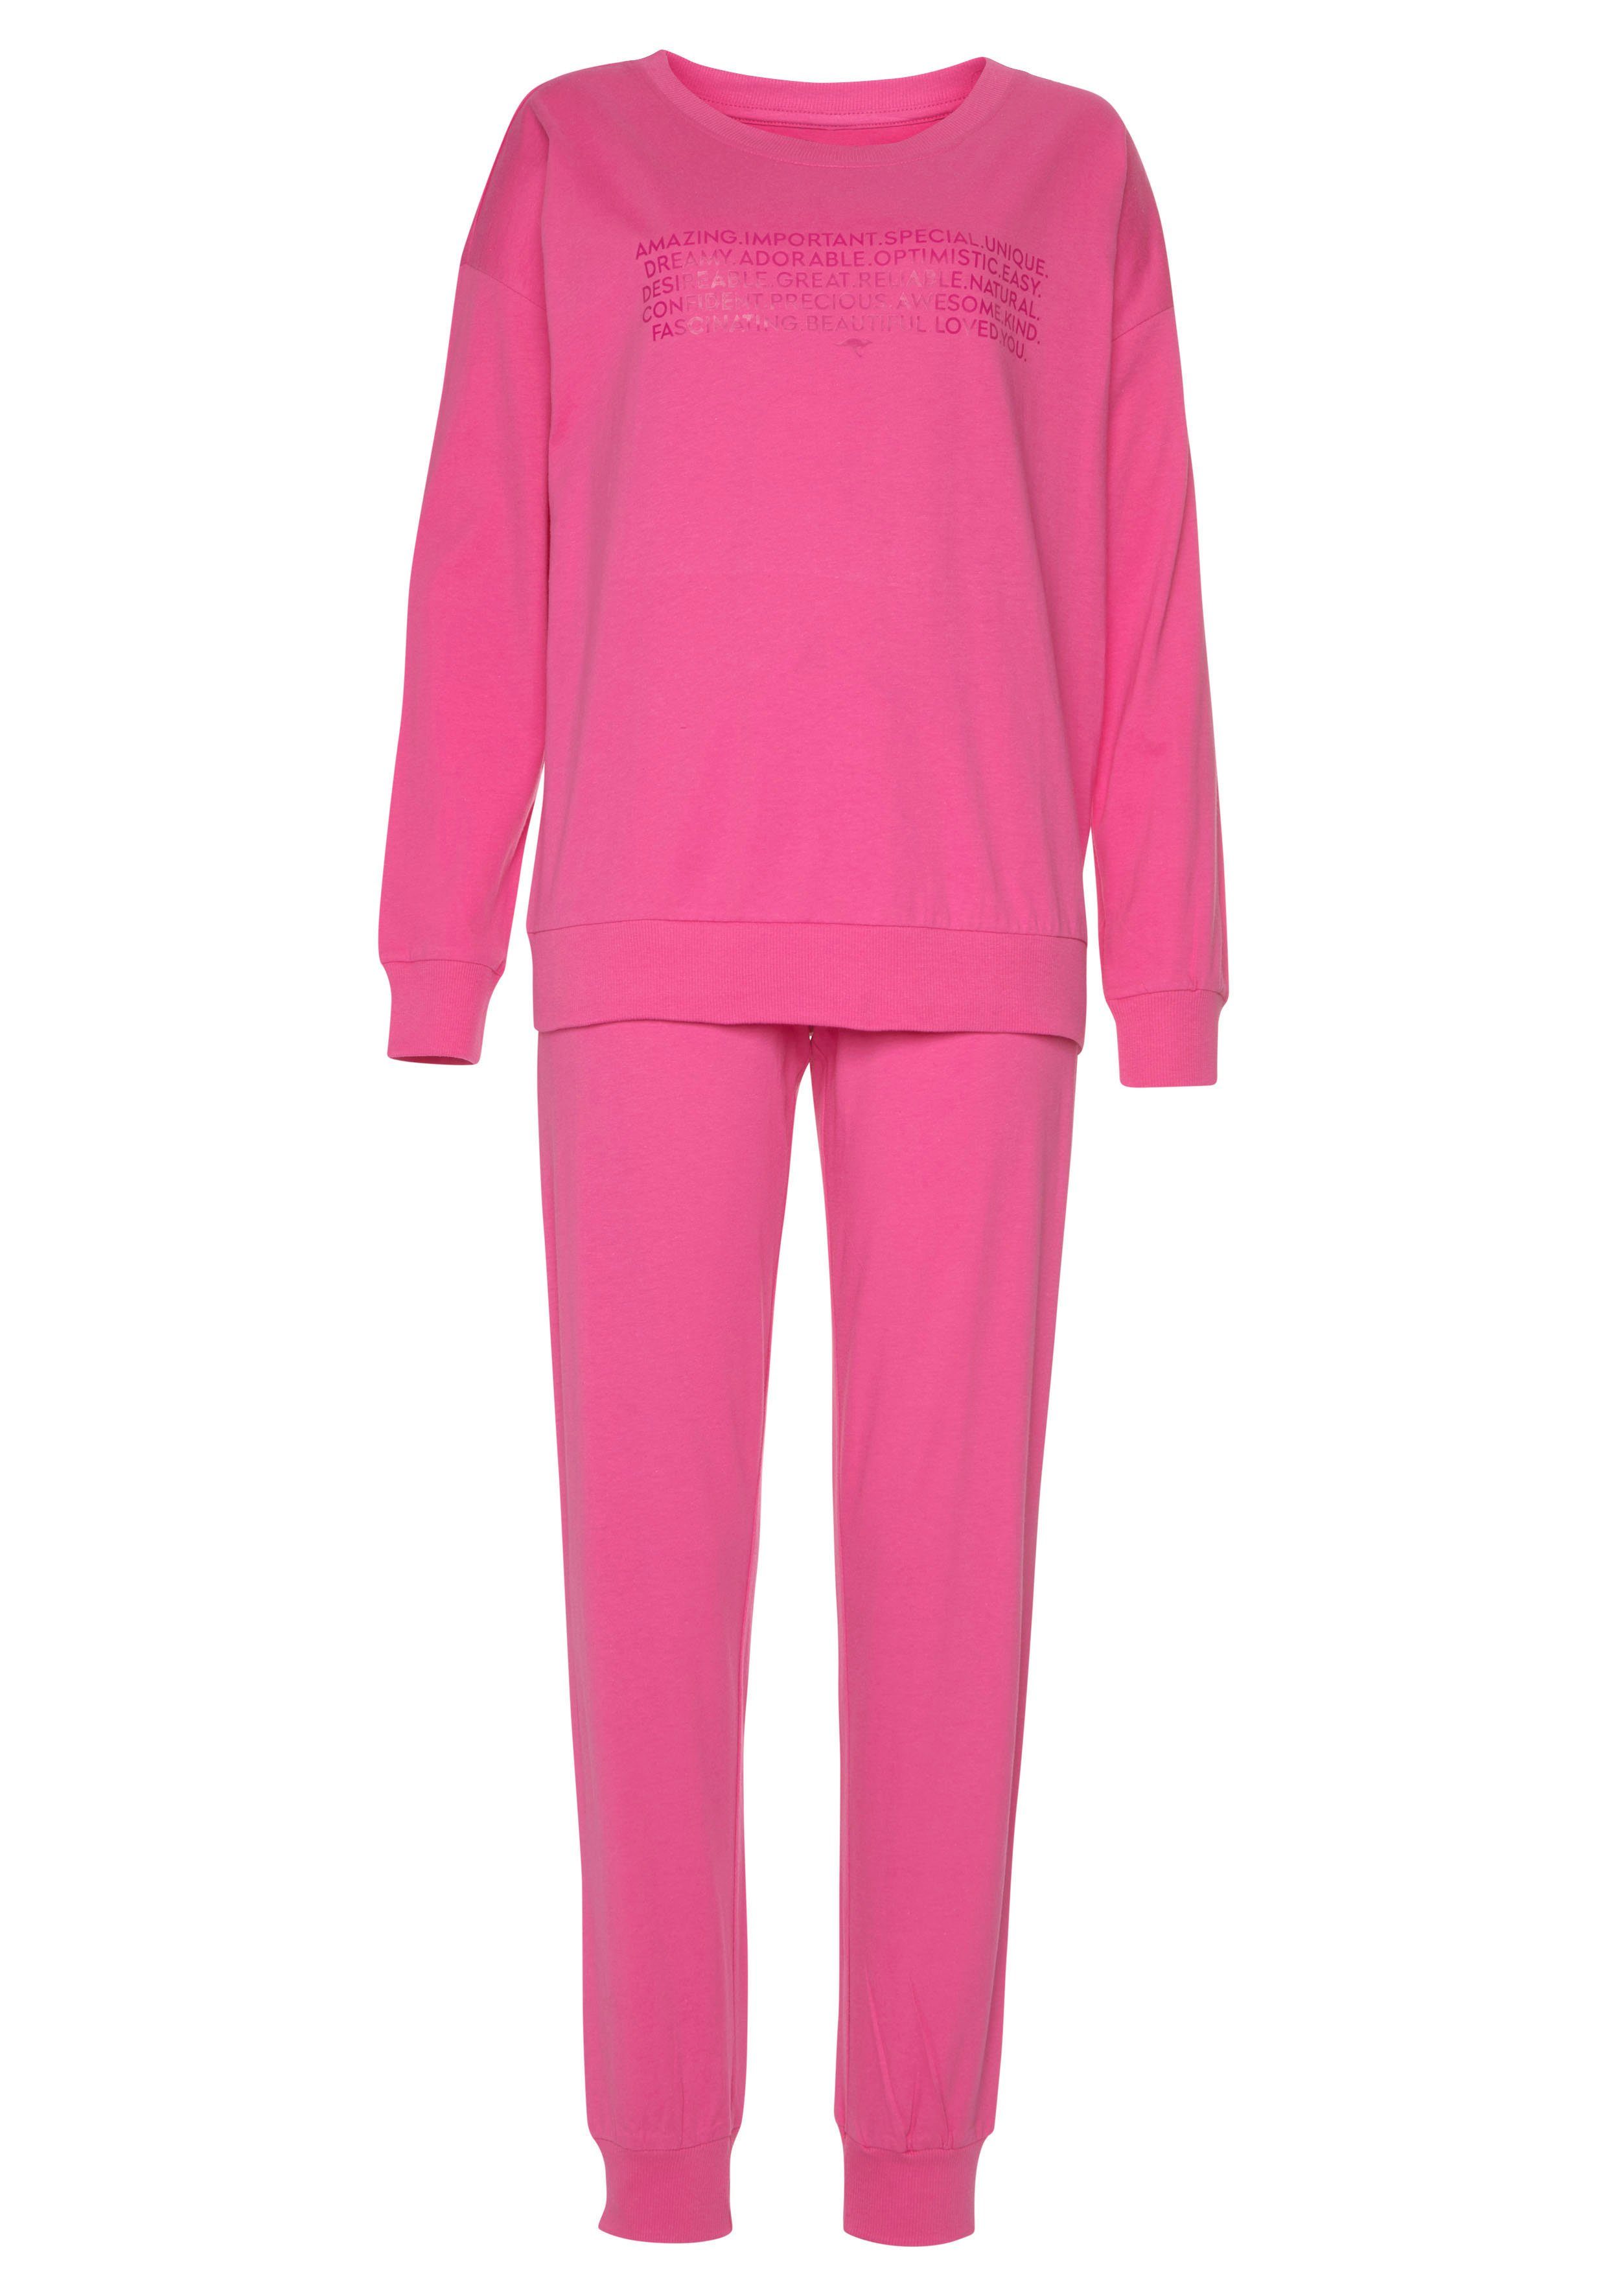 1 pink tlg., Stück) Pyjama (2 KangaROOS Slogan-Frontdruck mit